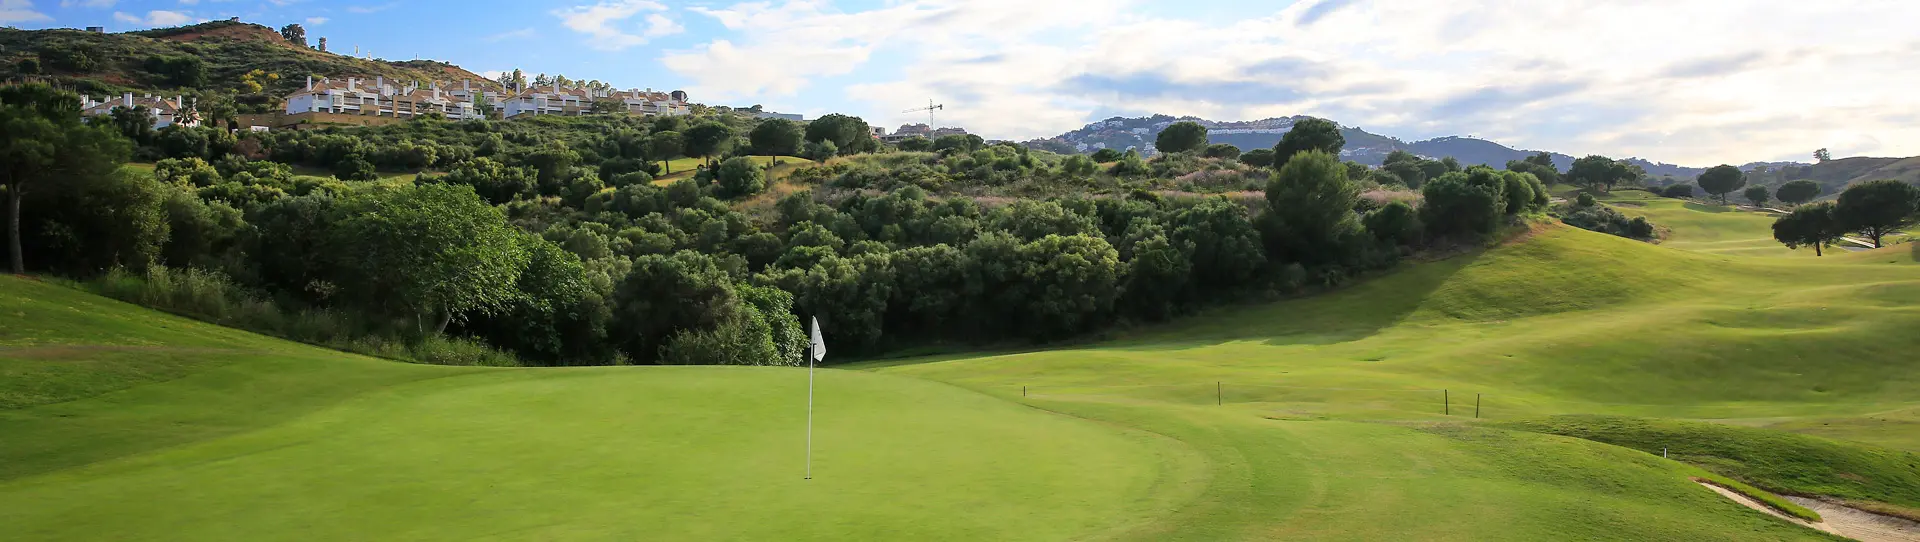 Spain Golf Driving Range - La Cala Resort Academy - Photo 2